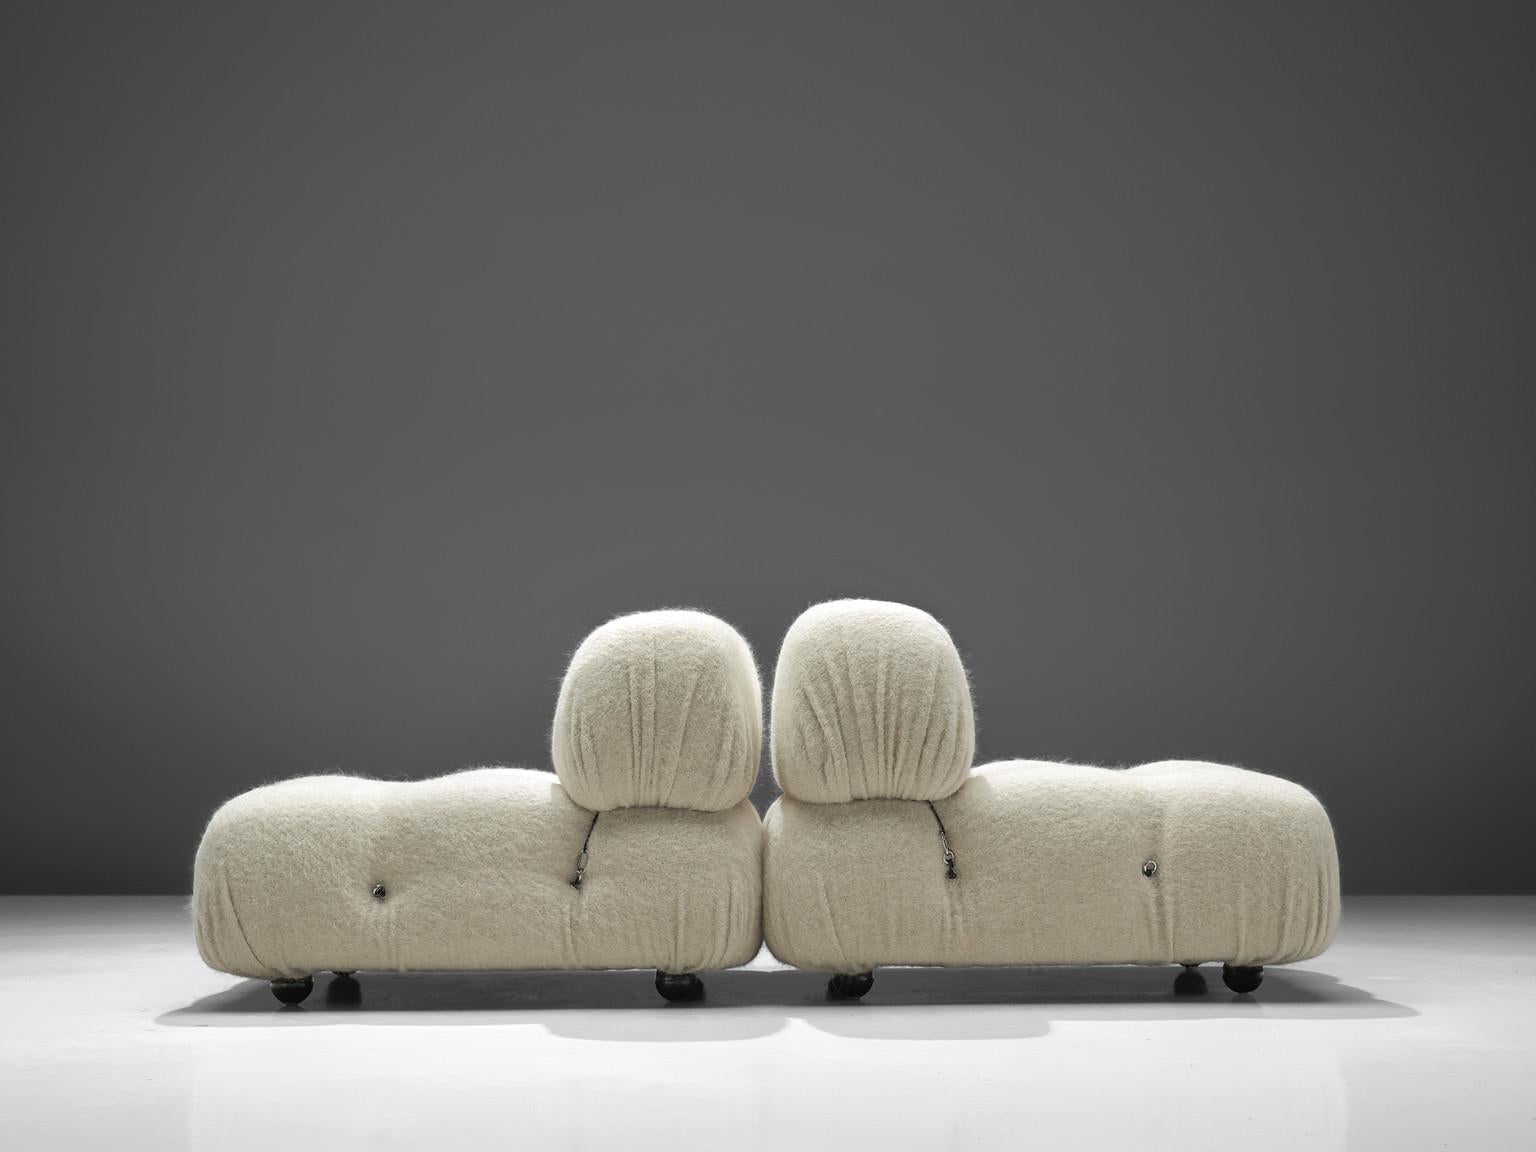 Wool One 'Camaleonda' Seating Element with Backrest by Mario Bellini, Italy, 1972